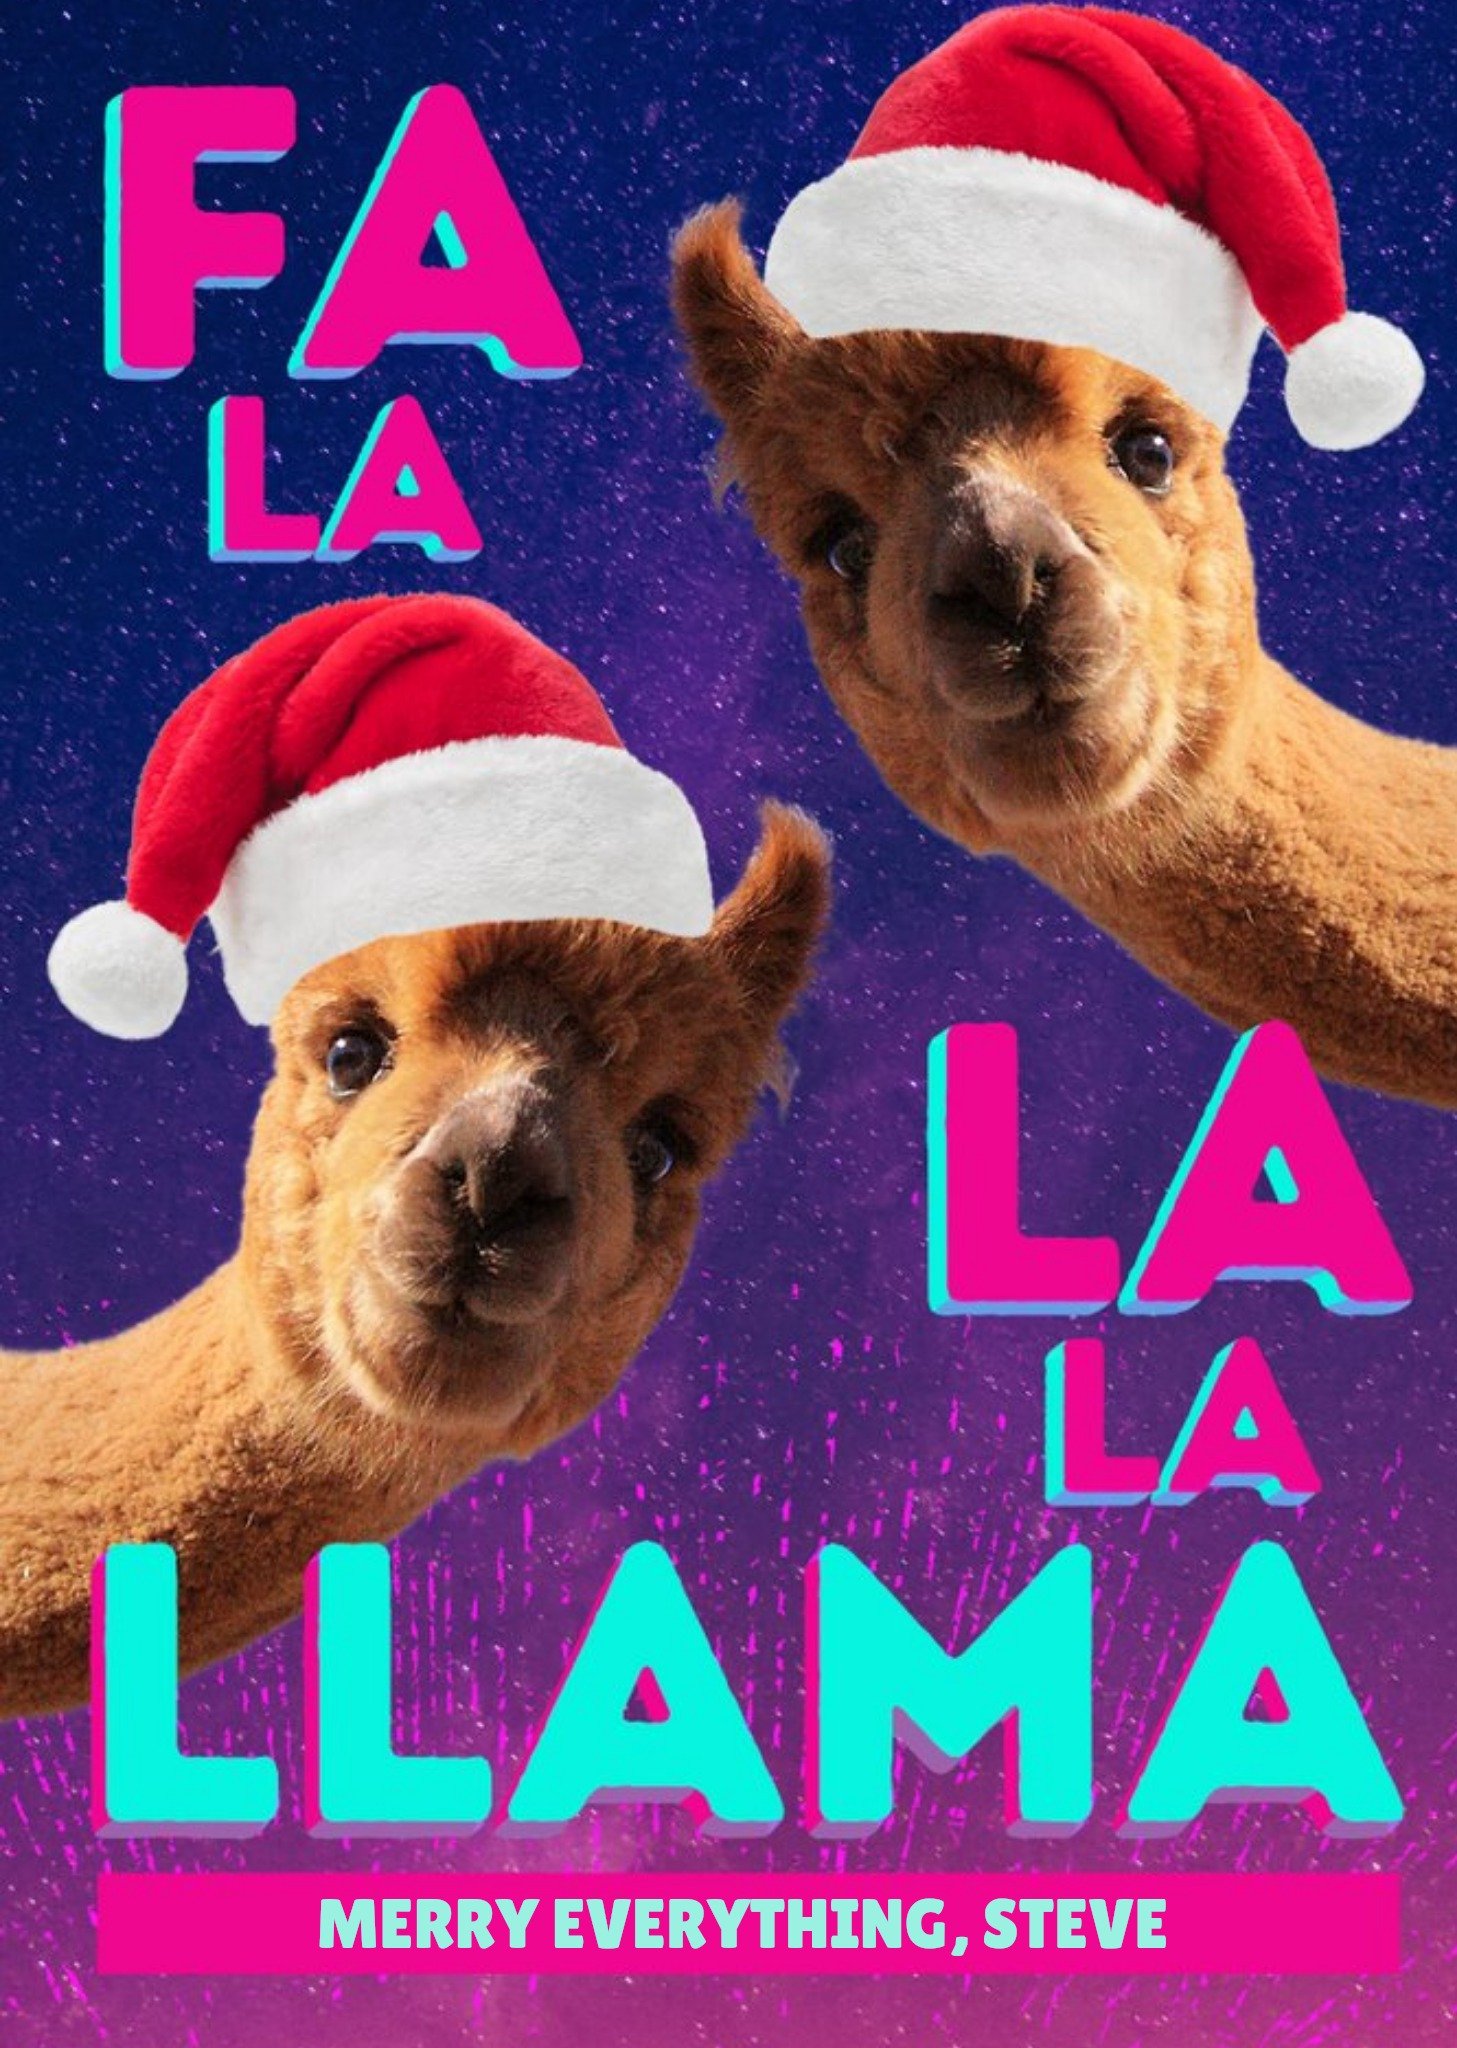 Moonpig Funny Fa La La La Llama Merry Everything Christmas Card, Large